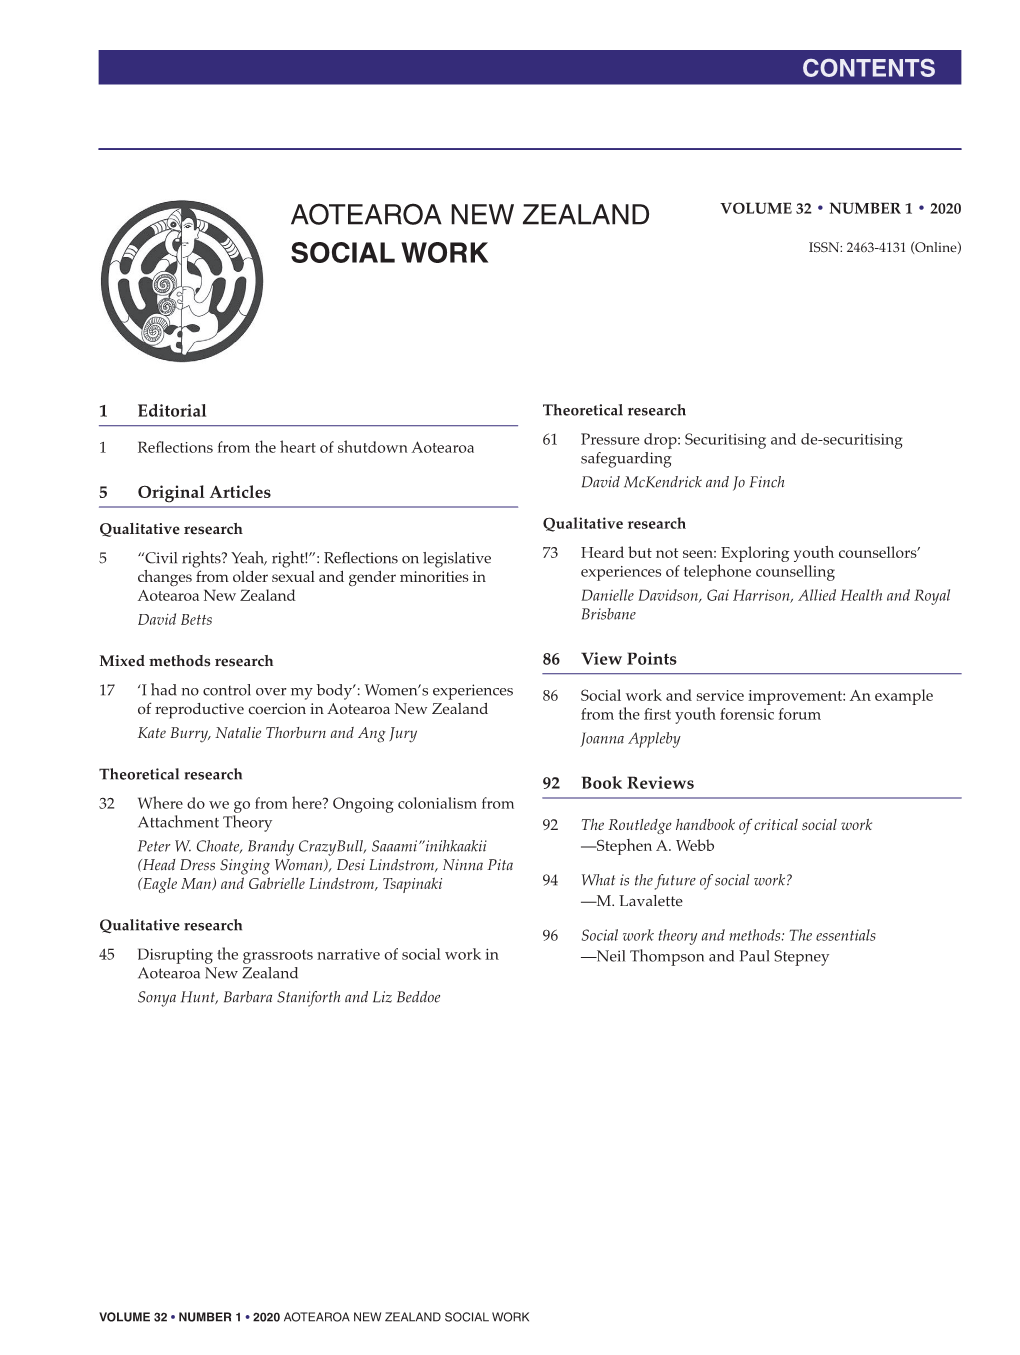 Aotearoa New Zealand Social Work Editorial